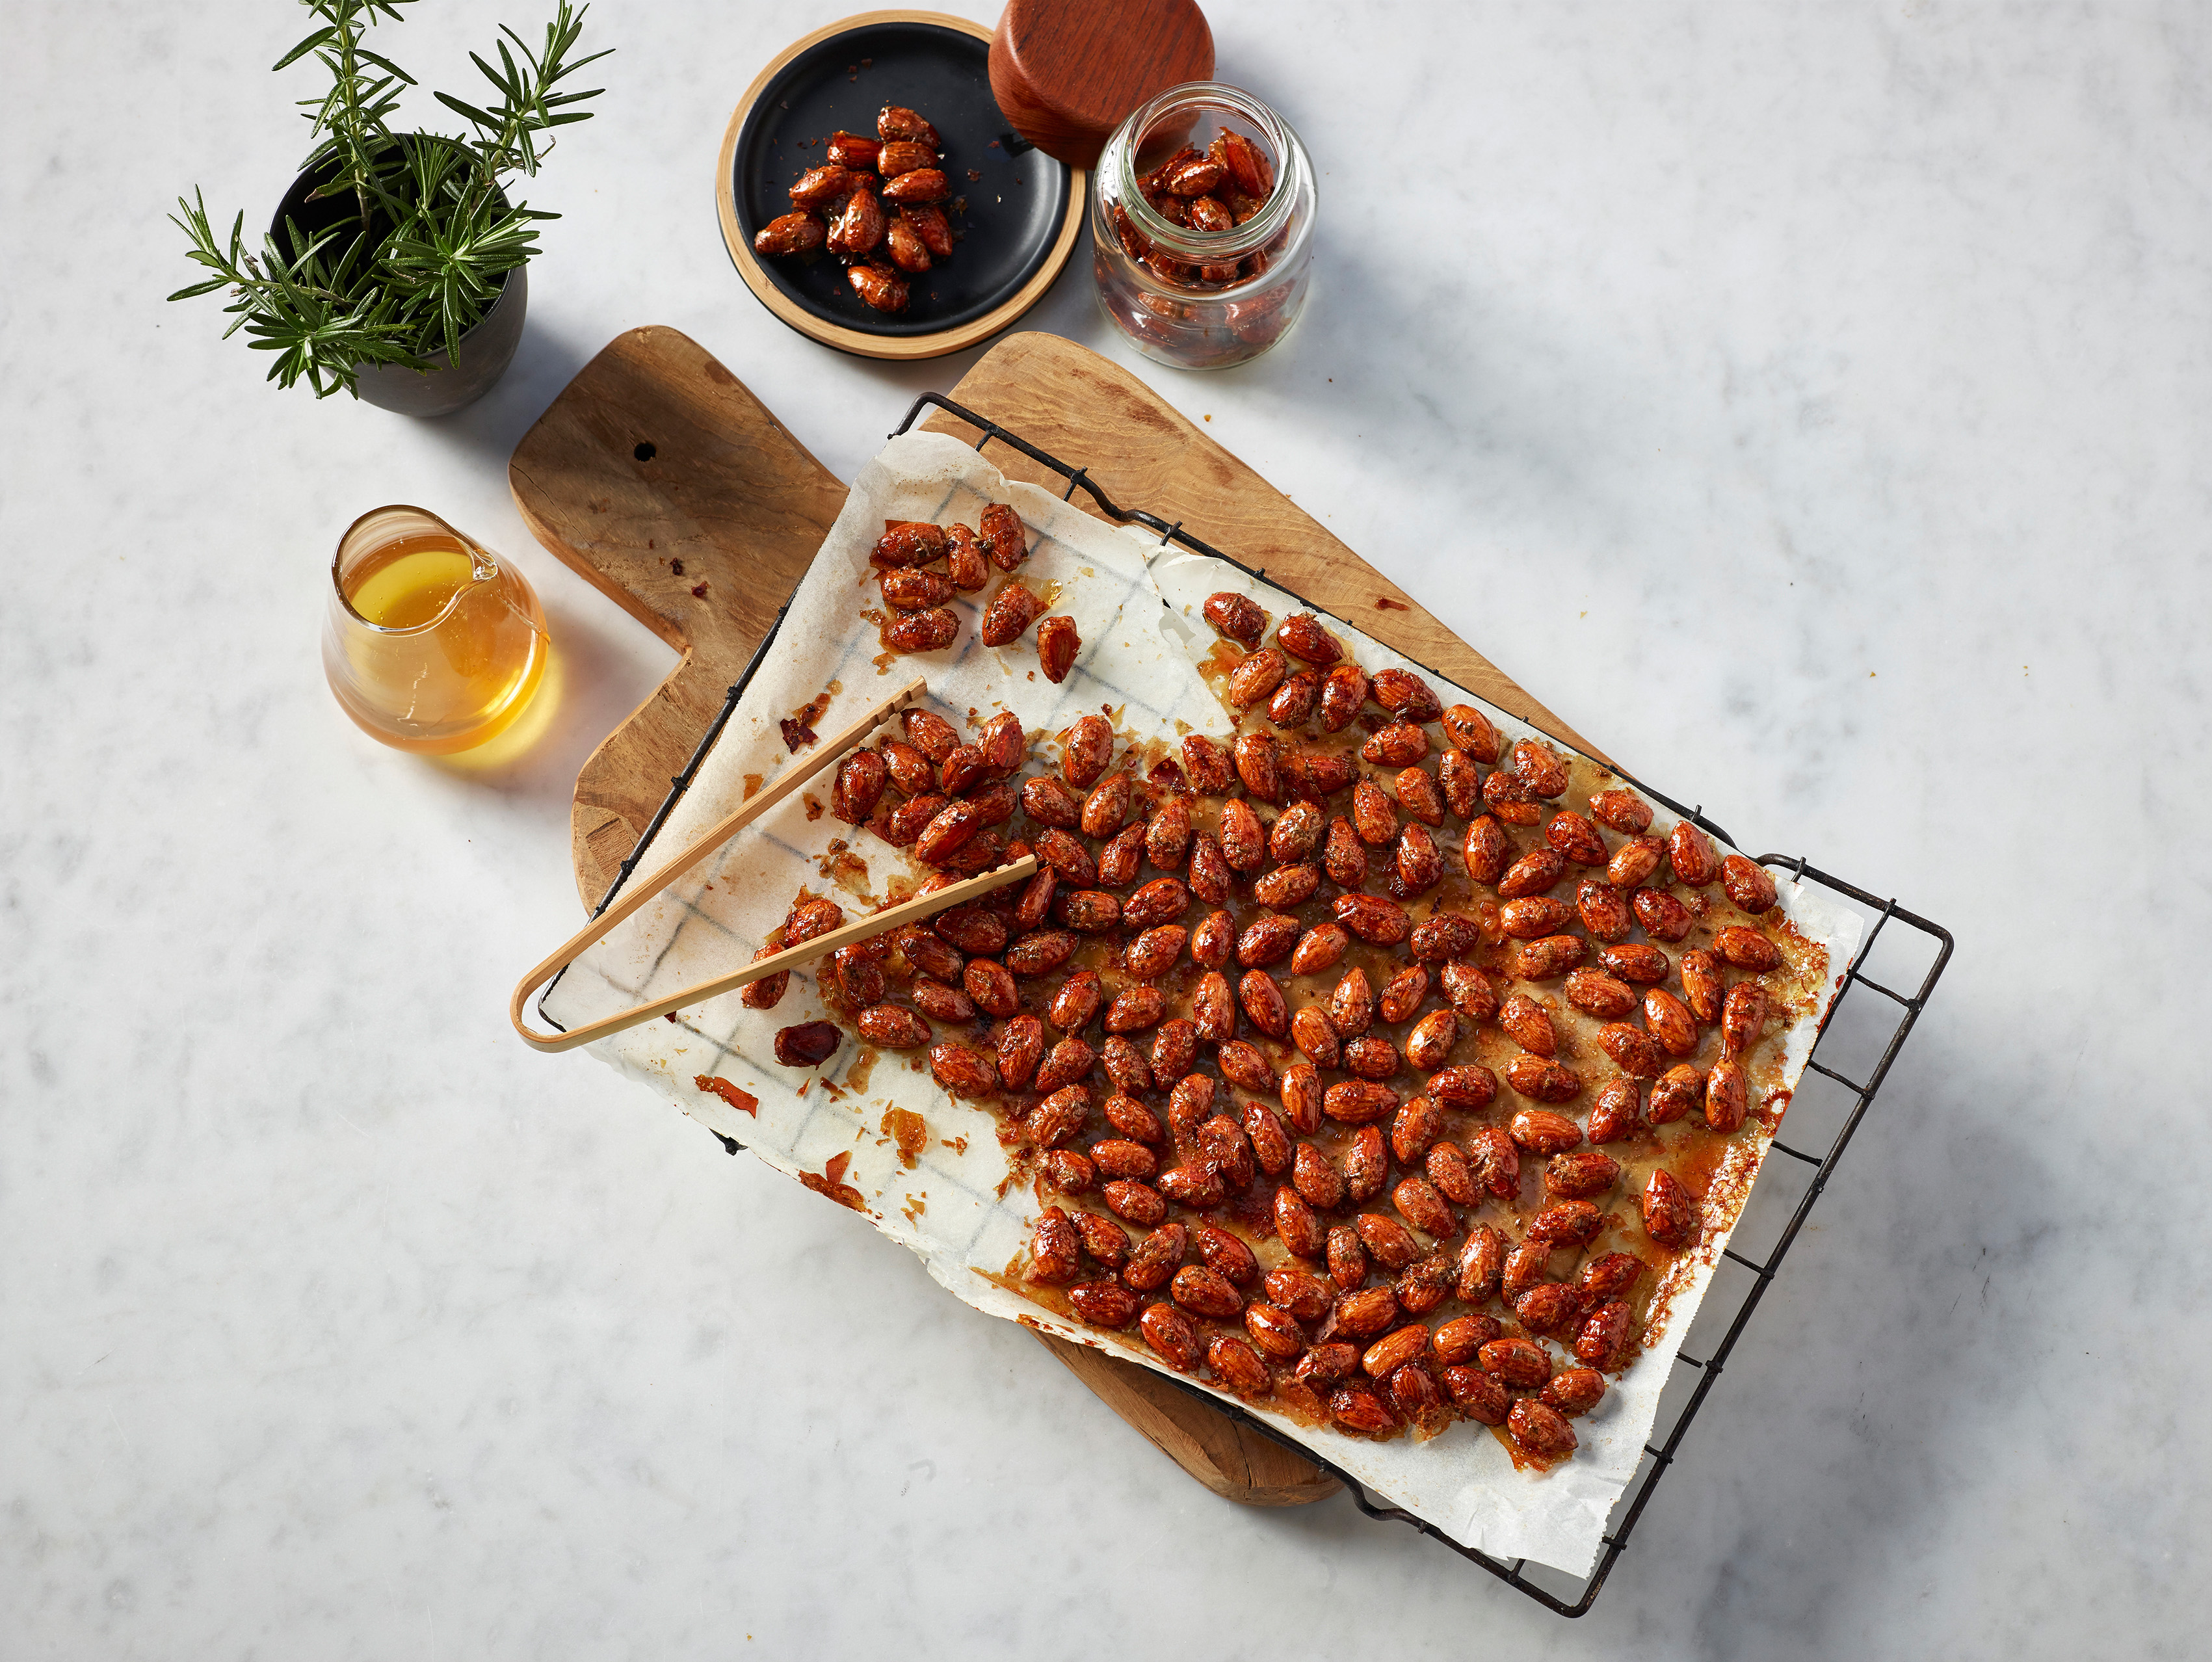 https://prod-app.breville.com/original/recipe/1650947668/Dehydrated+Honey-Rosemary+Roasted+Activated+Almonds.jpg